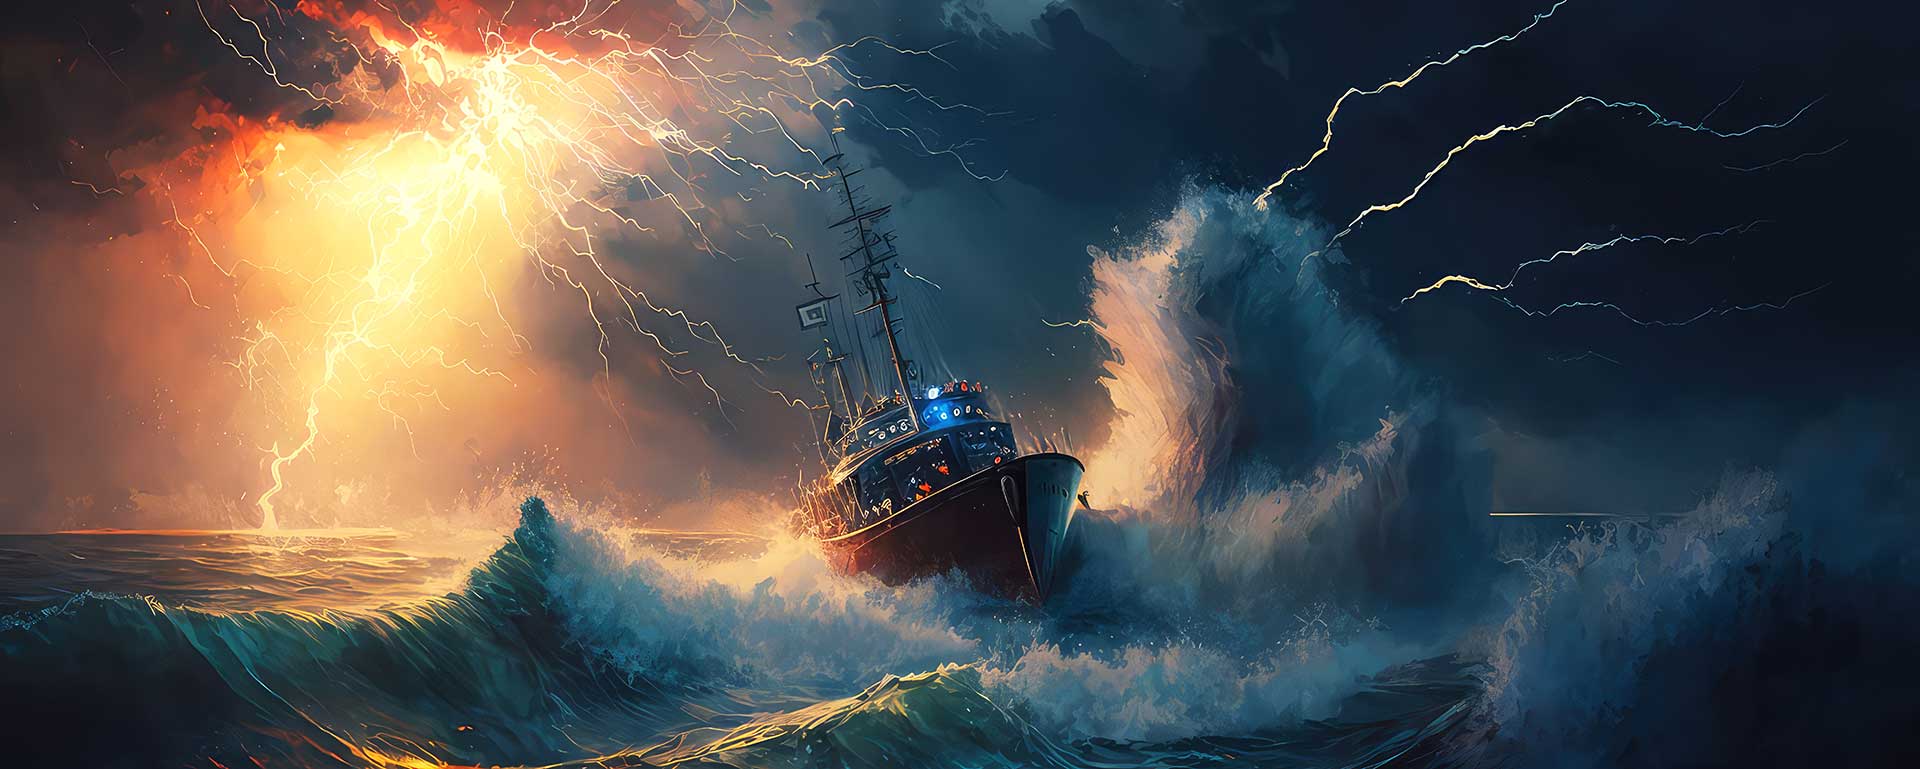 A ship sailing through choppy, stormy waters